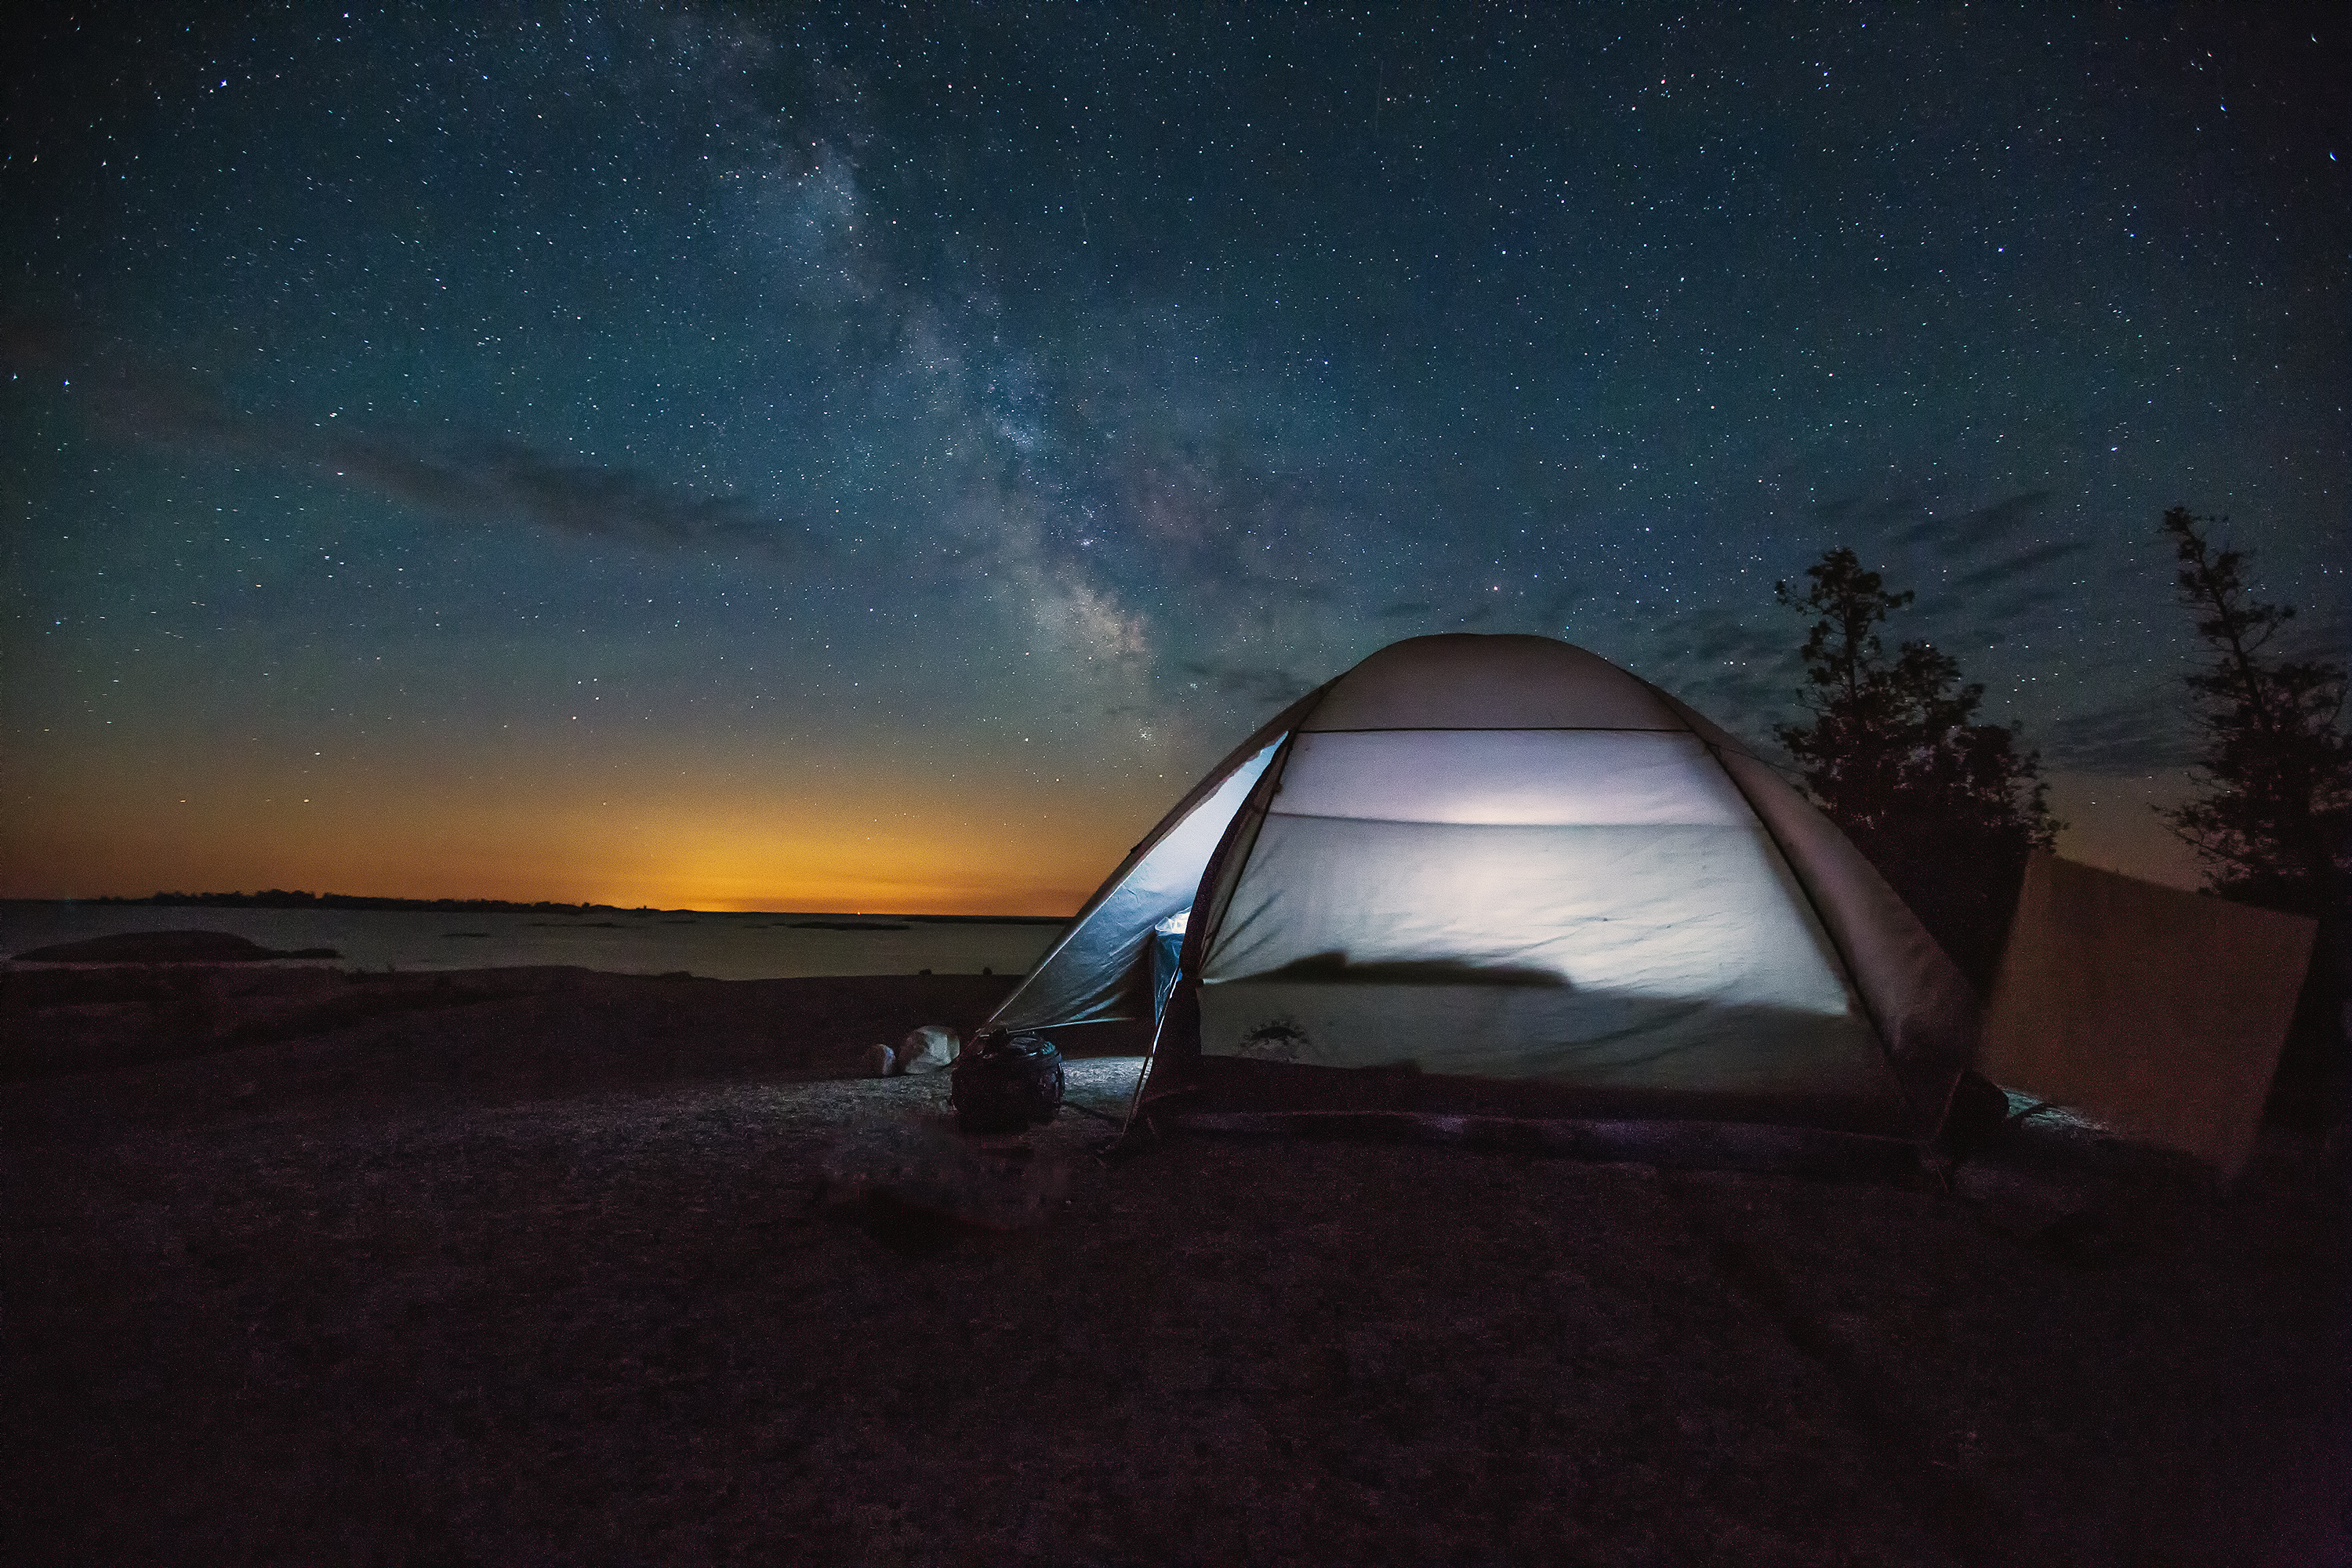 Milky way over tent, Georgian Bay, Ontario, Canada